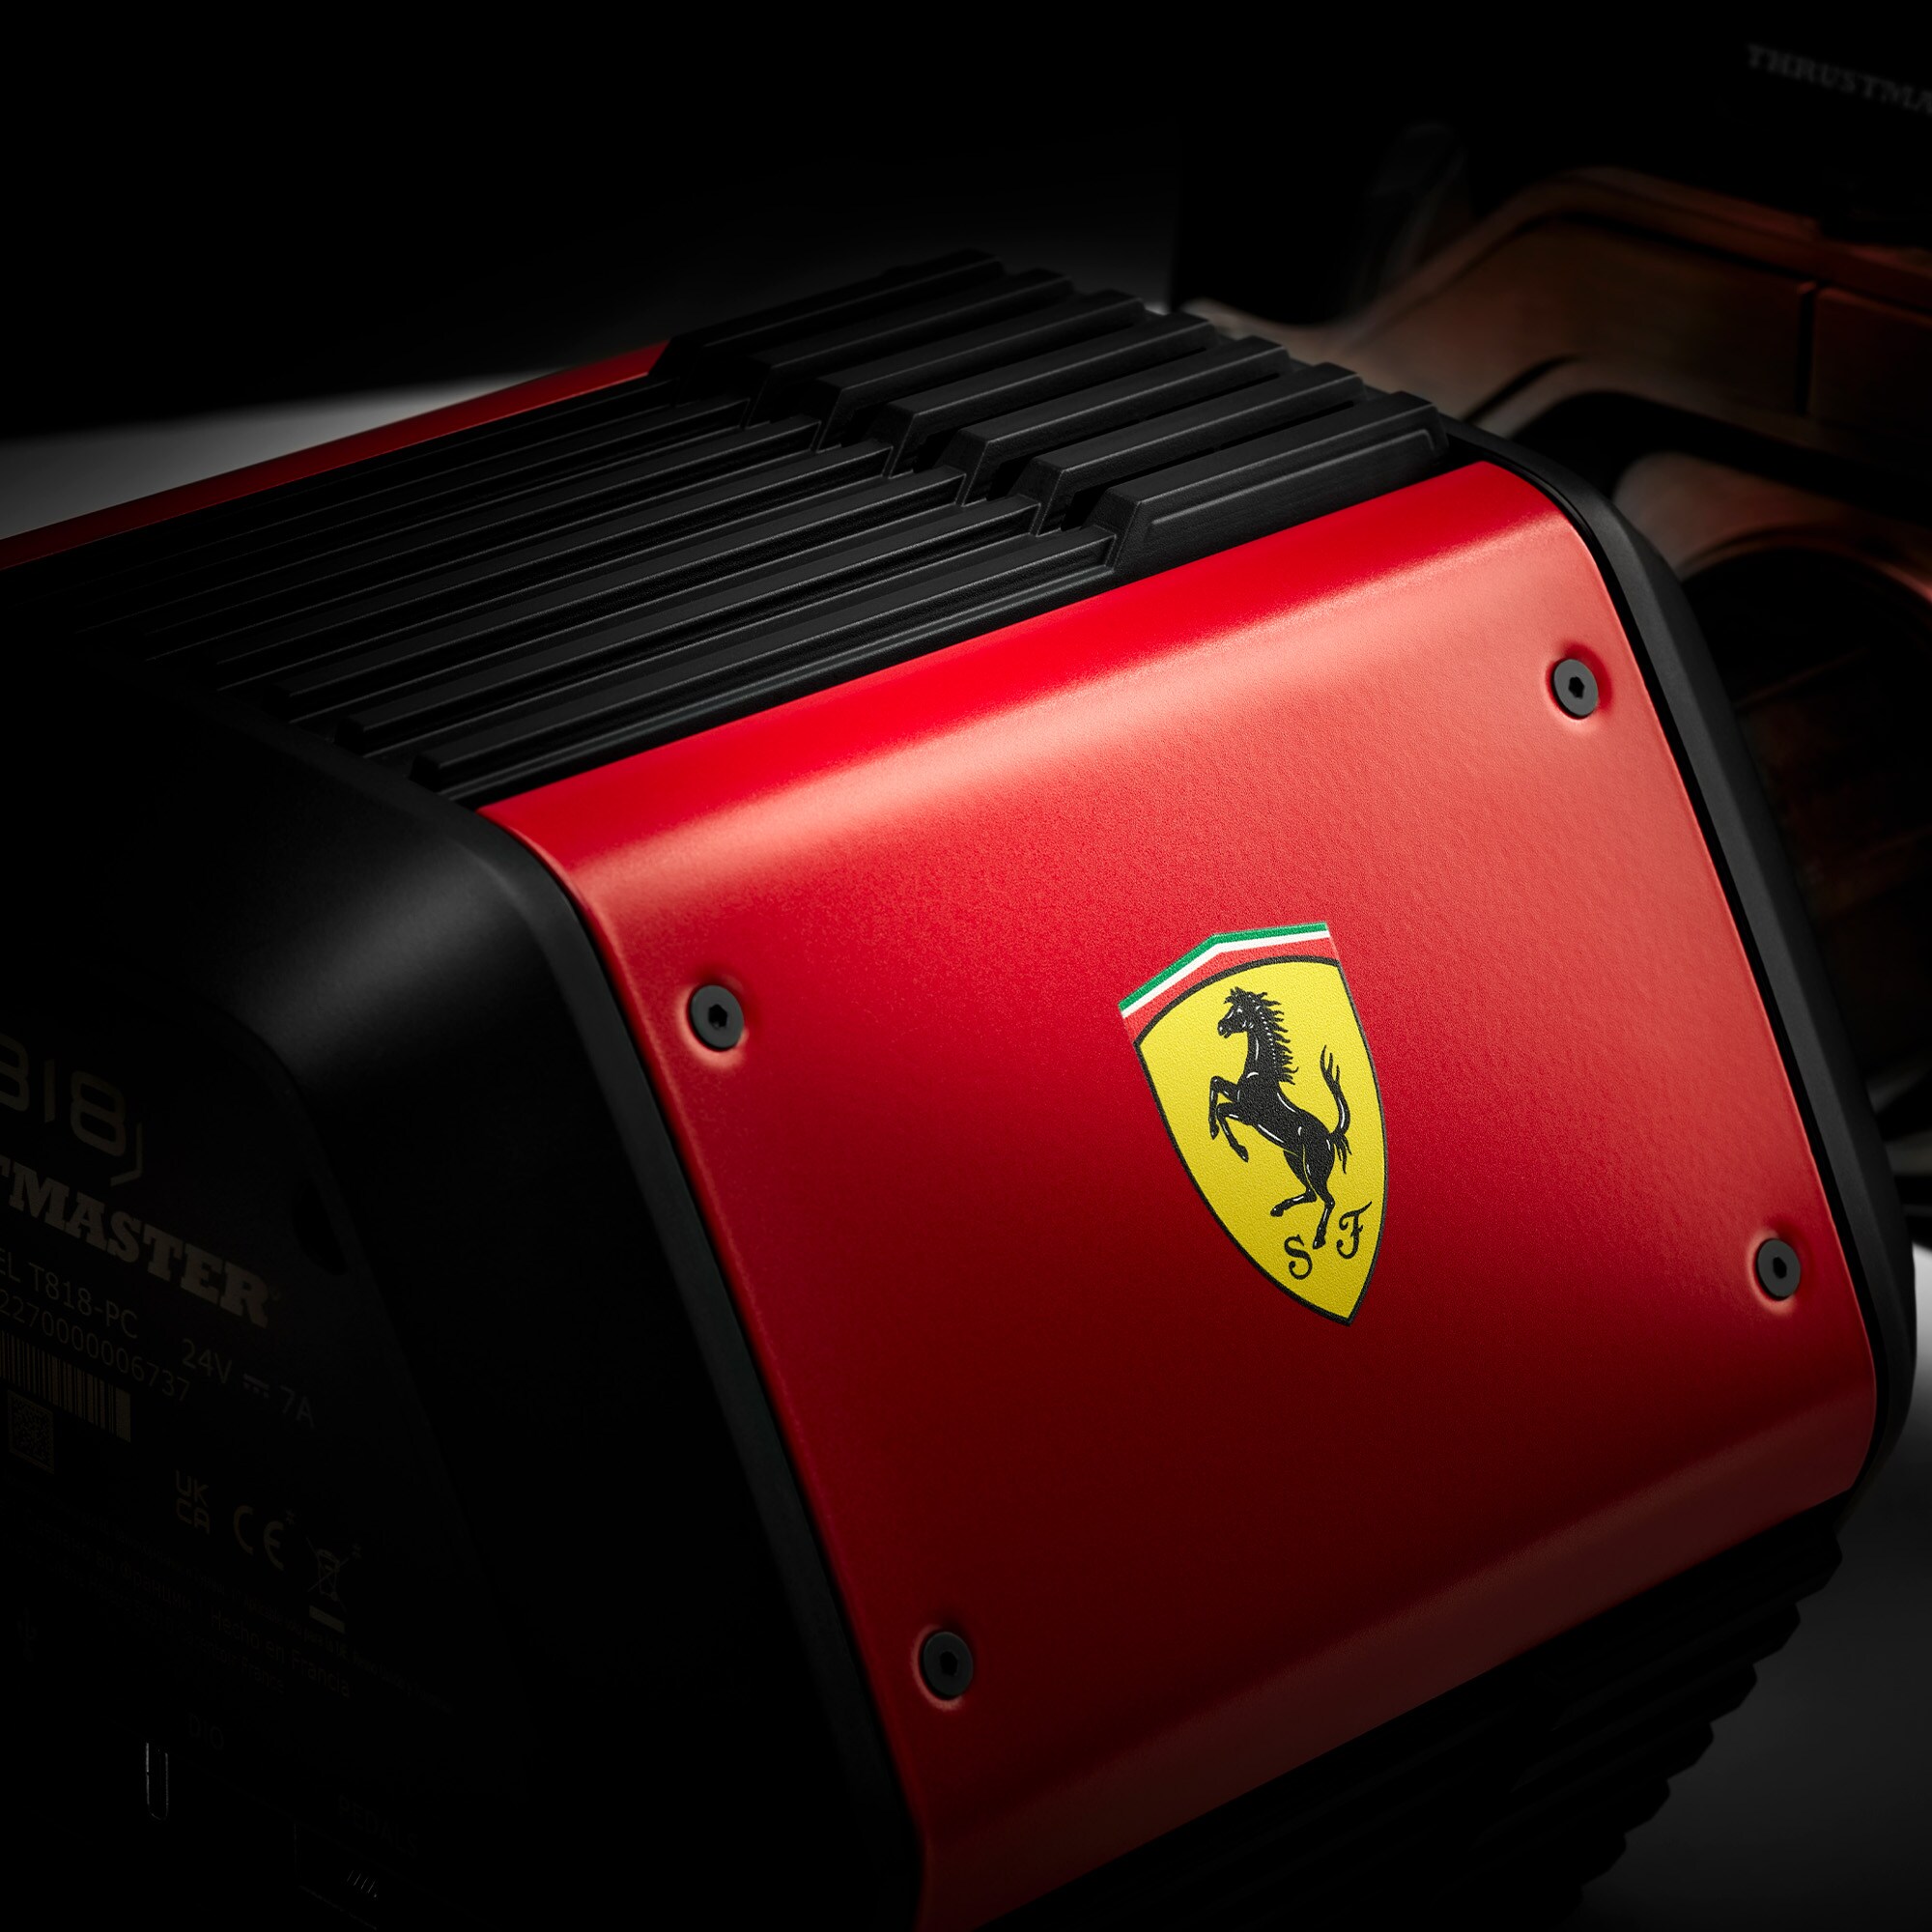 Formel 1 Lenkrad für den Simulator: Dieses Ferrari-Lenkrad für PC